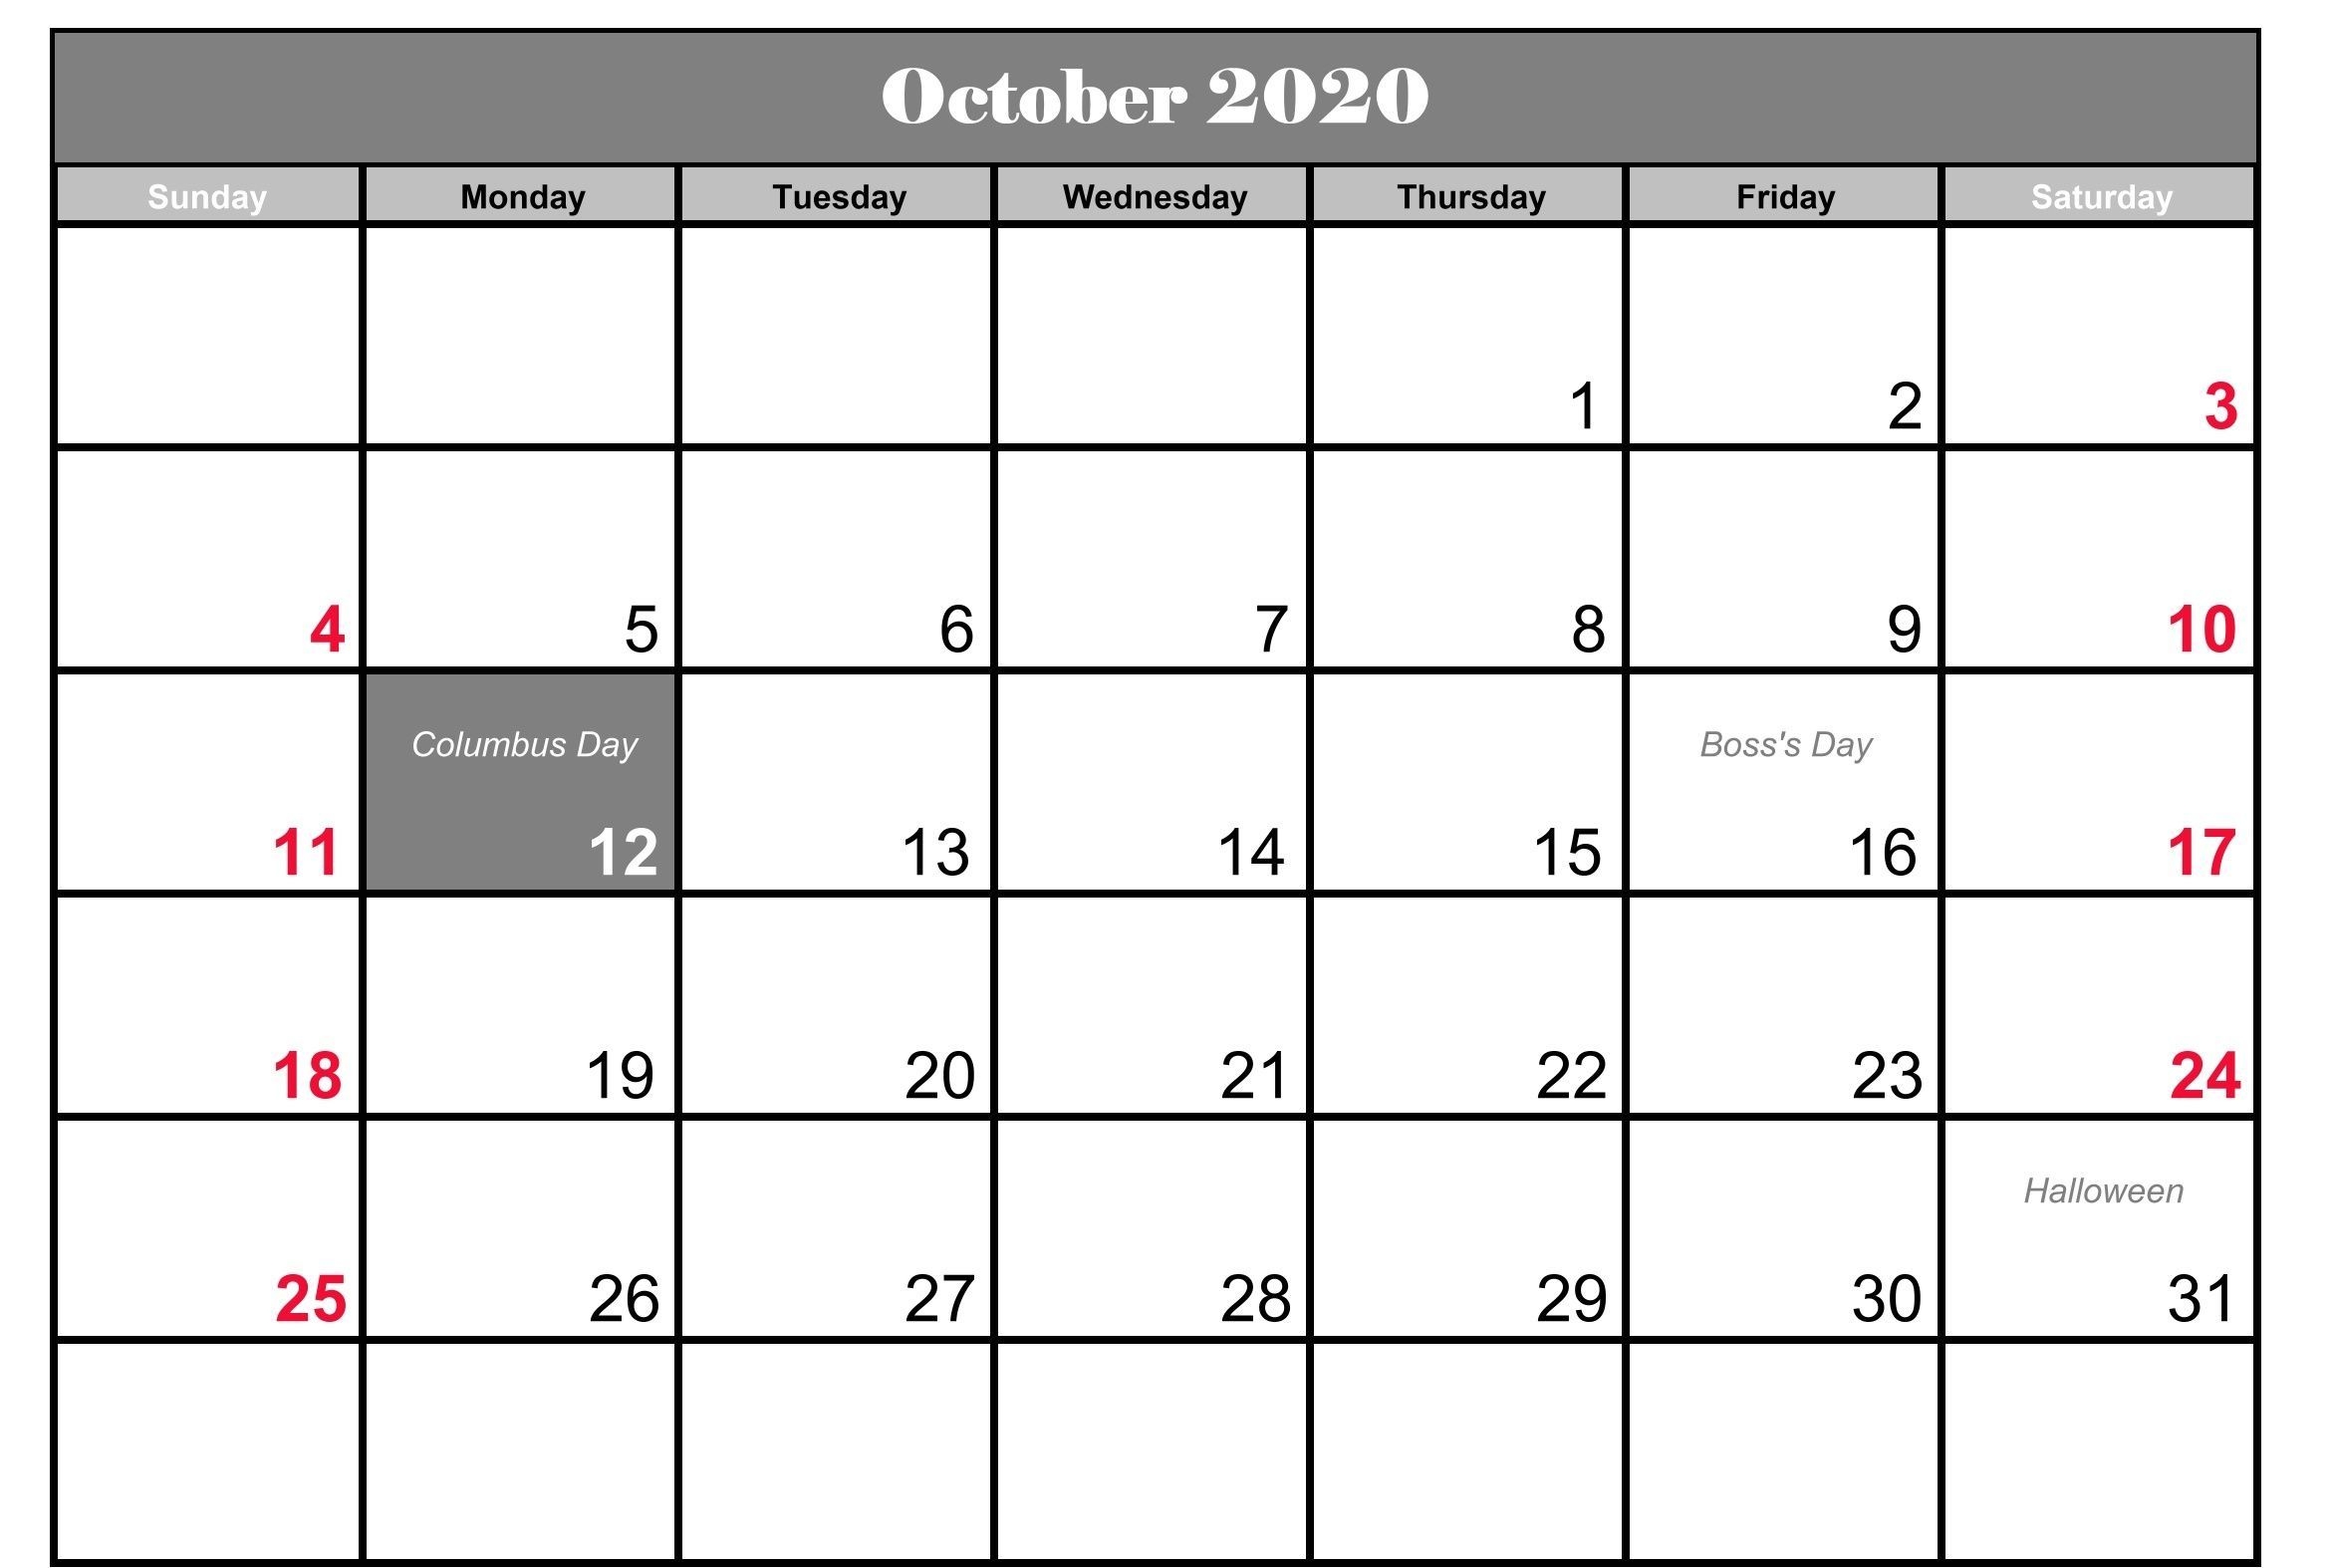 October 2020 Holidays Calendar Template | Holiday Calendar